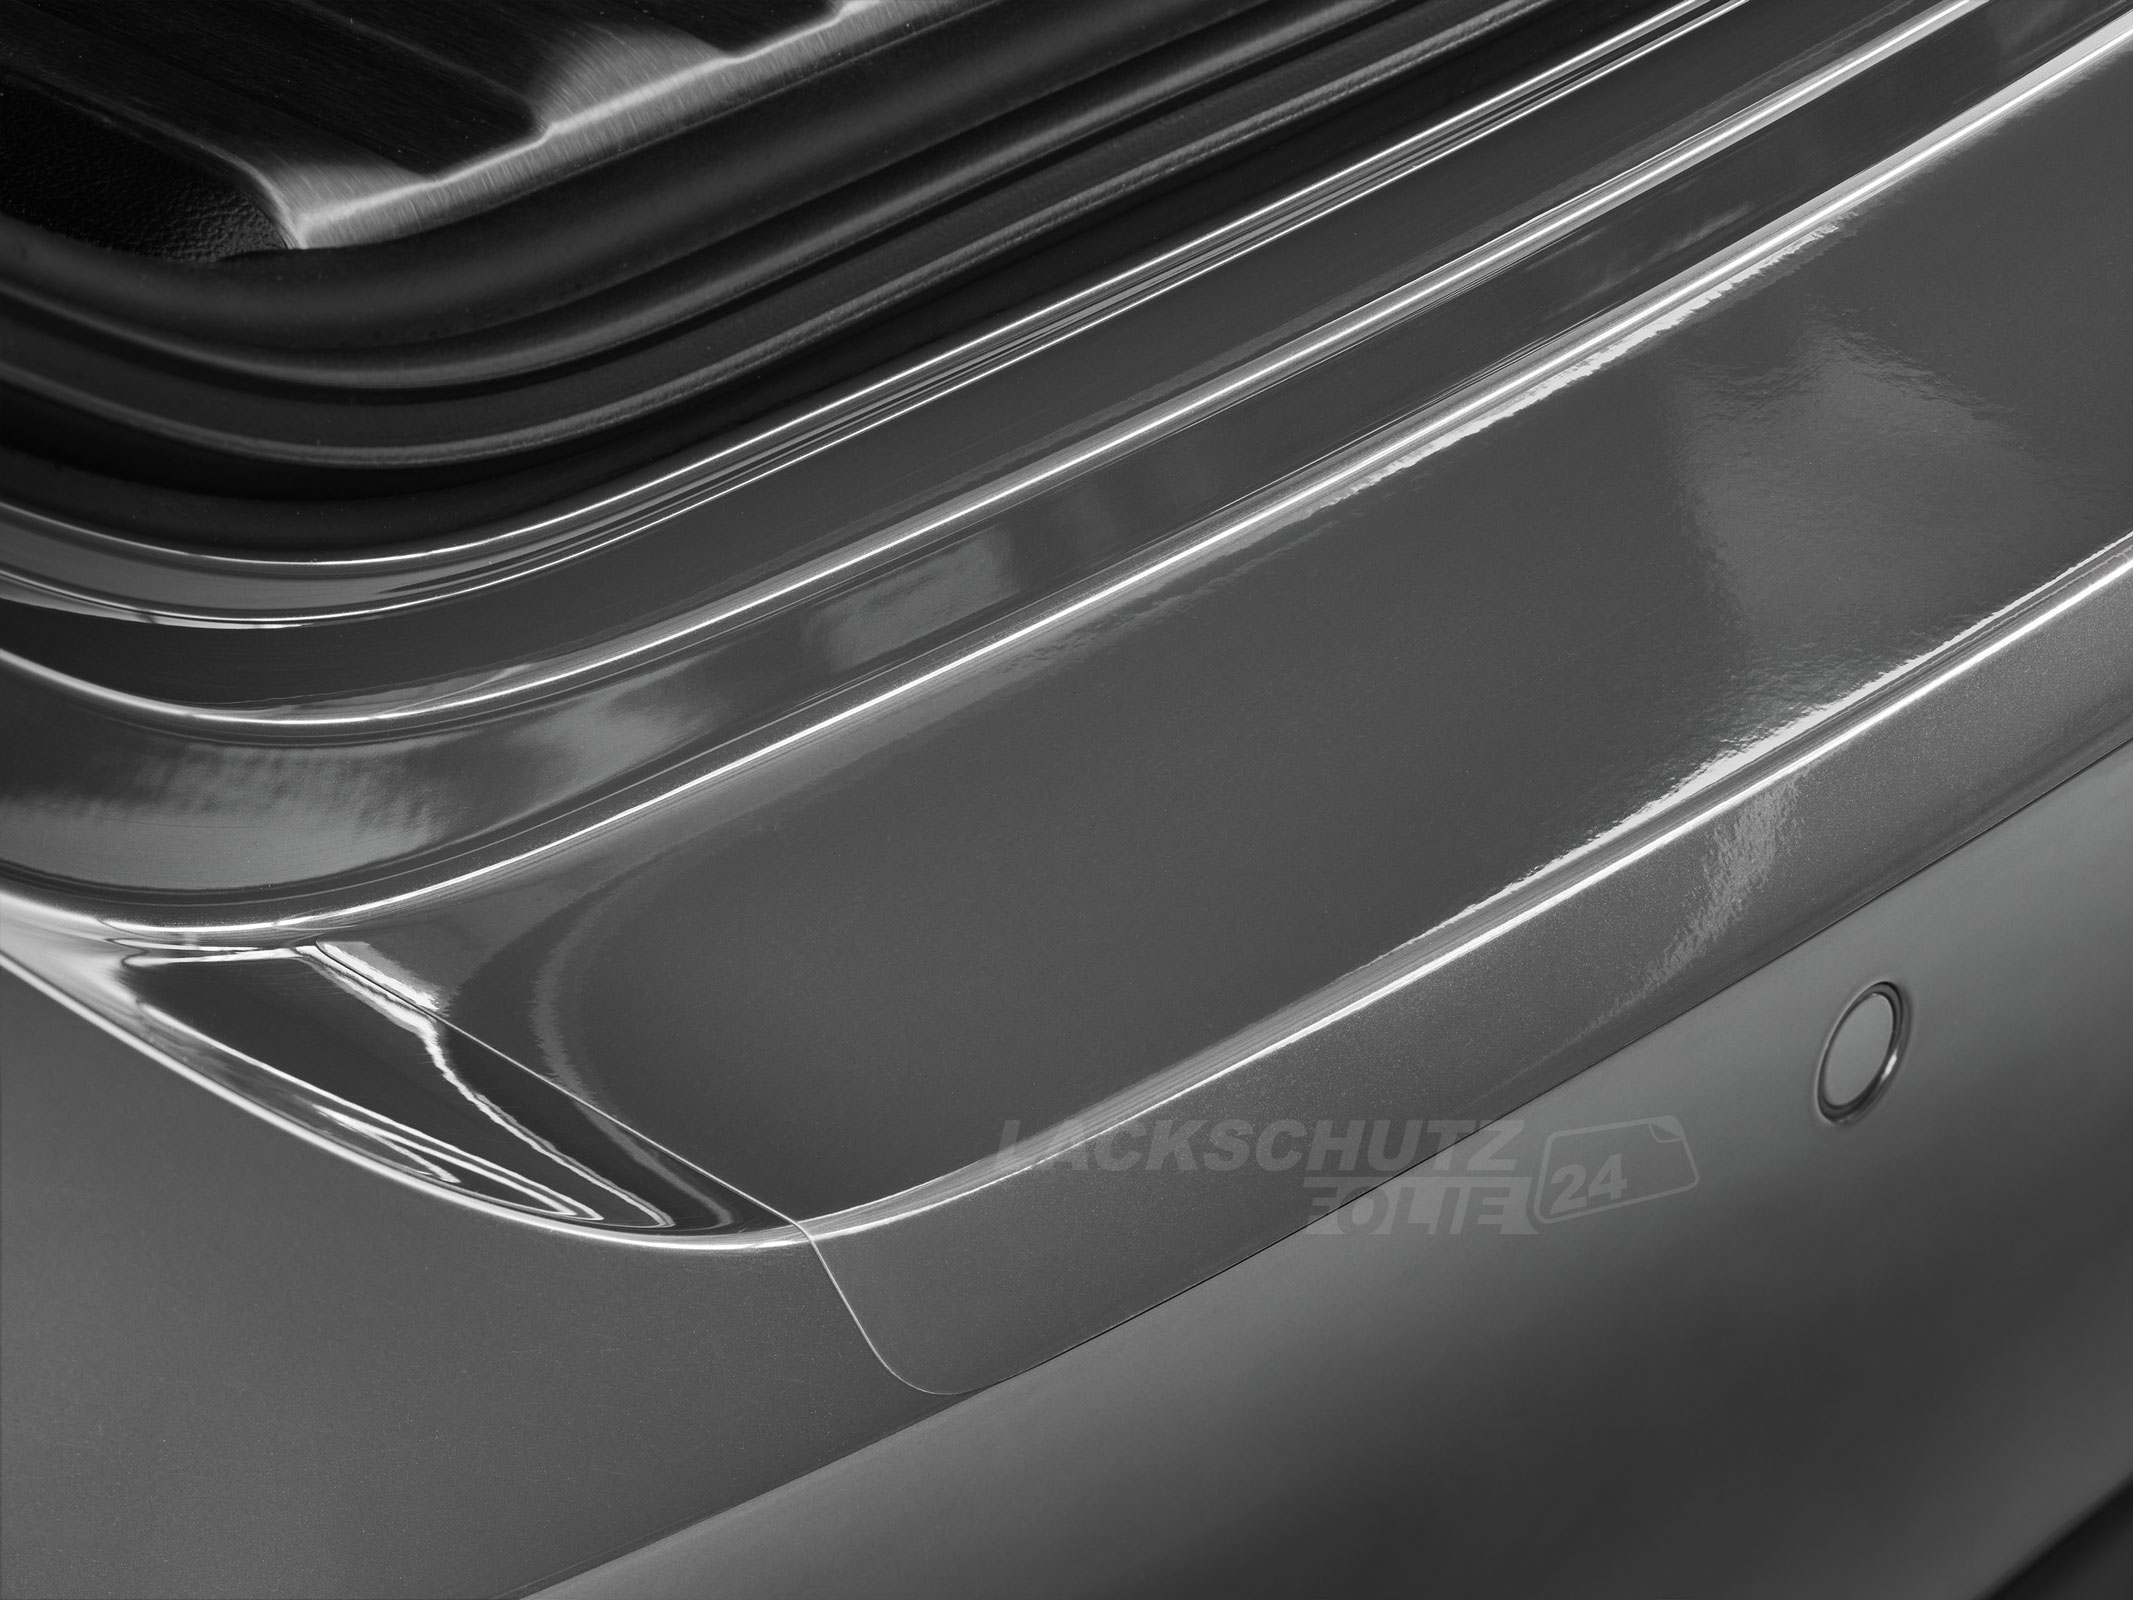 Ladekantenschutzfolie - Transparent Glatt Hochglänzend für Hyundai i40cw (Kombi) ab BJ 09/2011 + Facelift